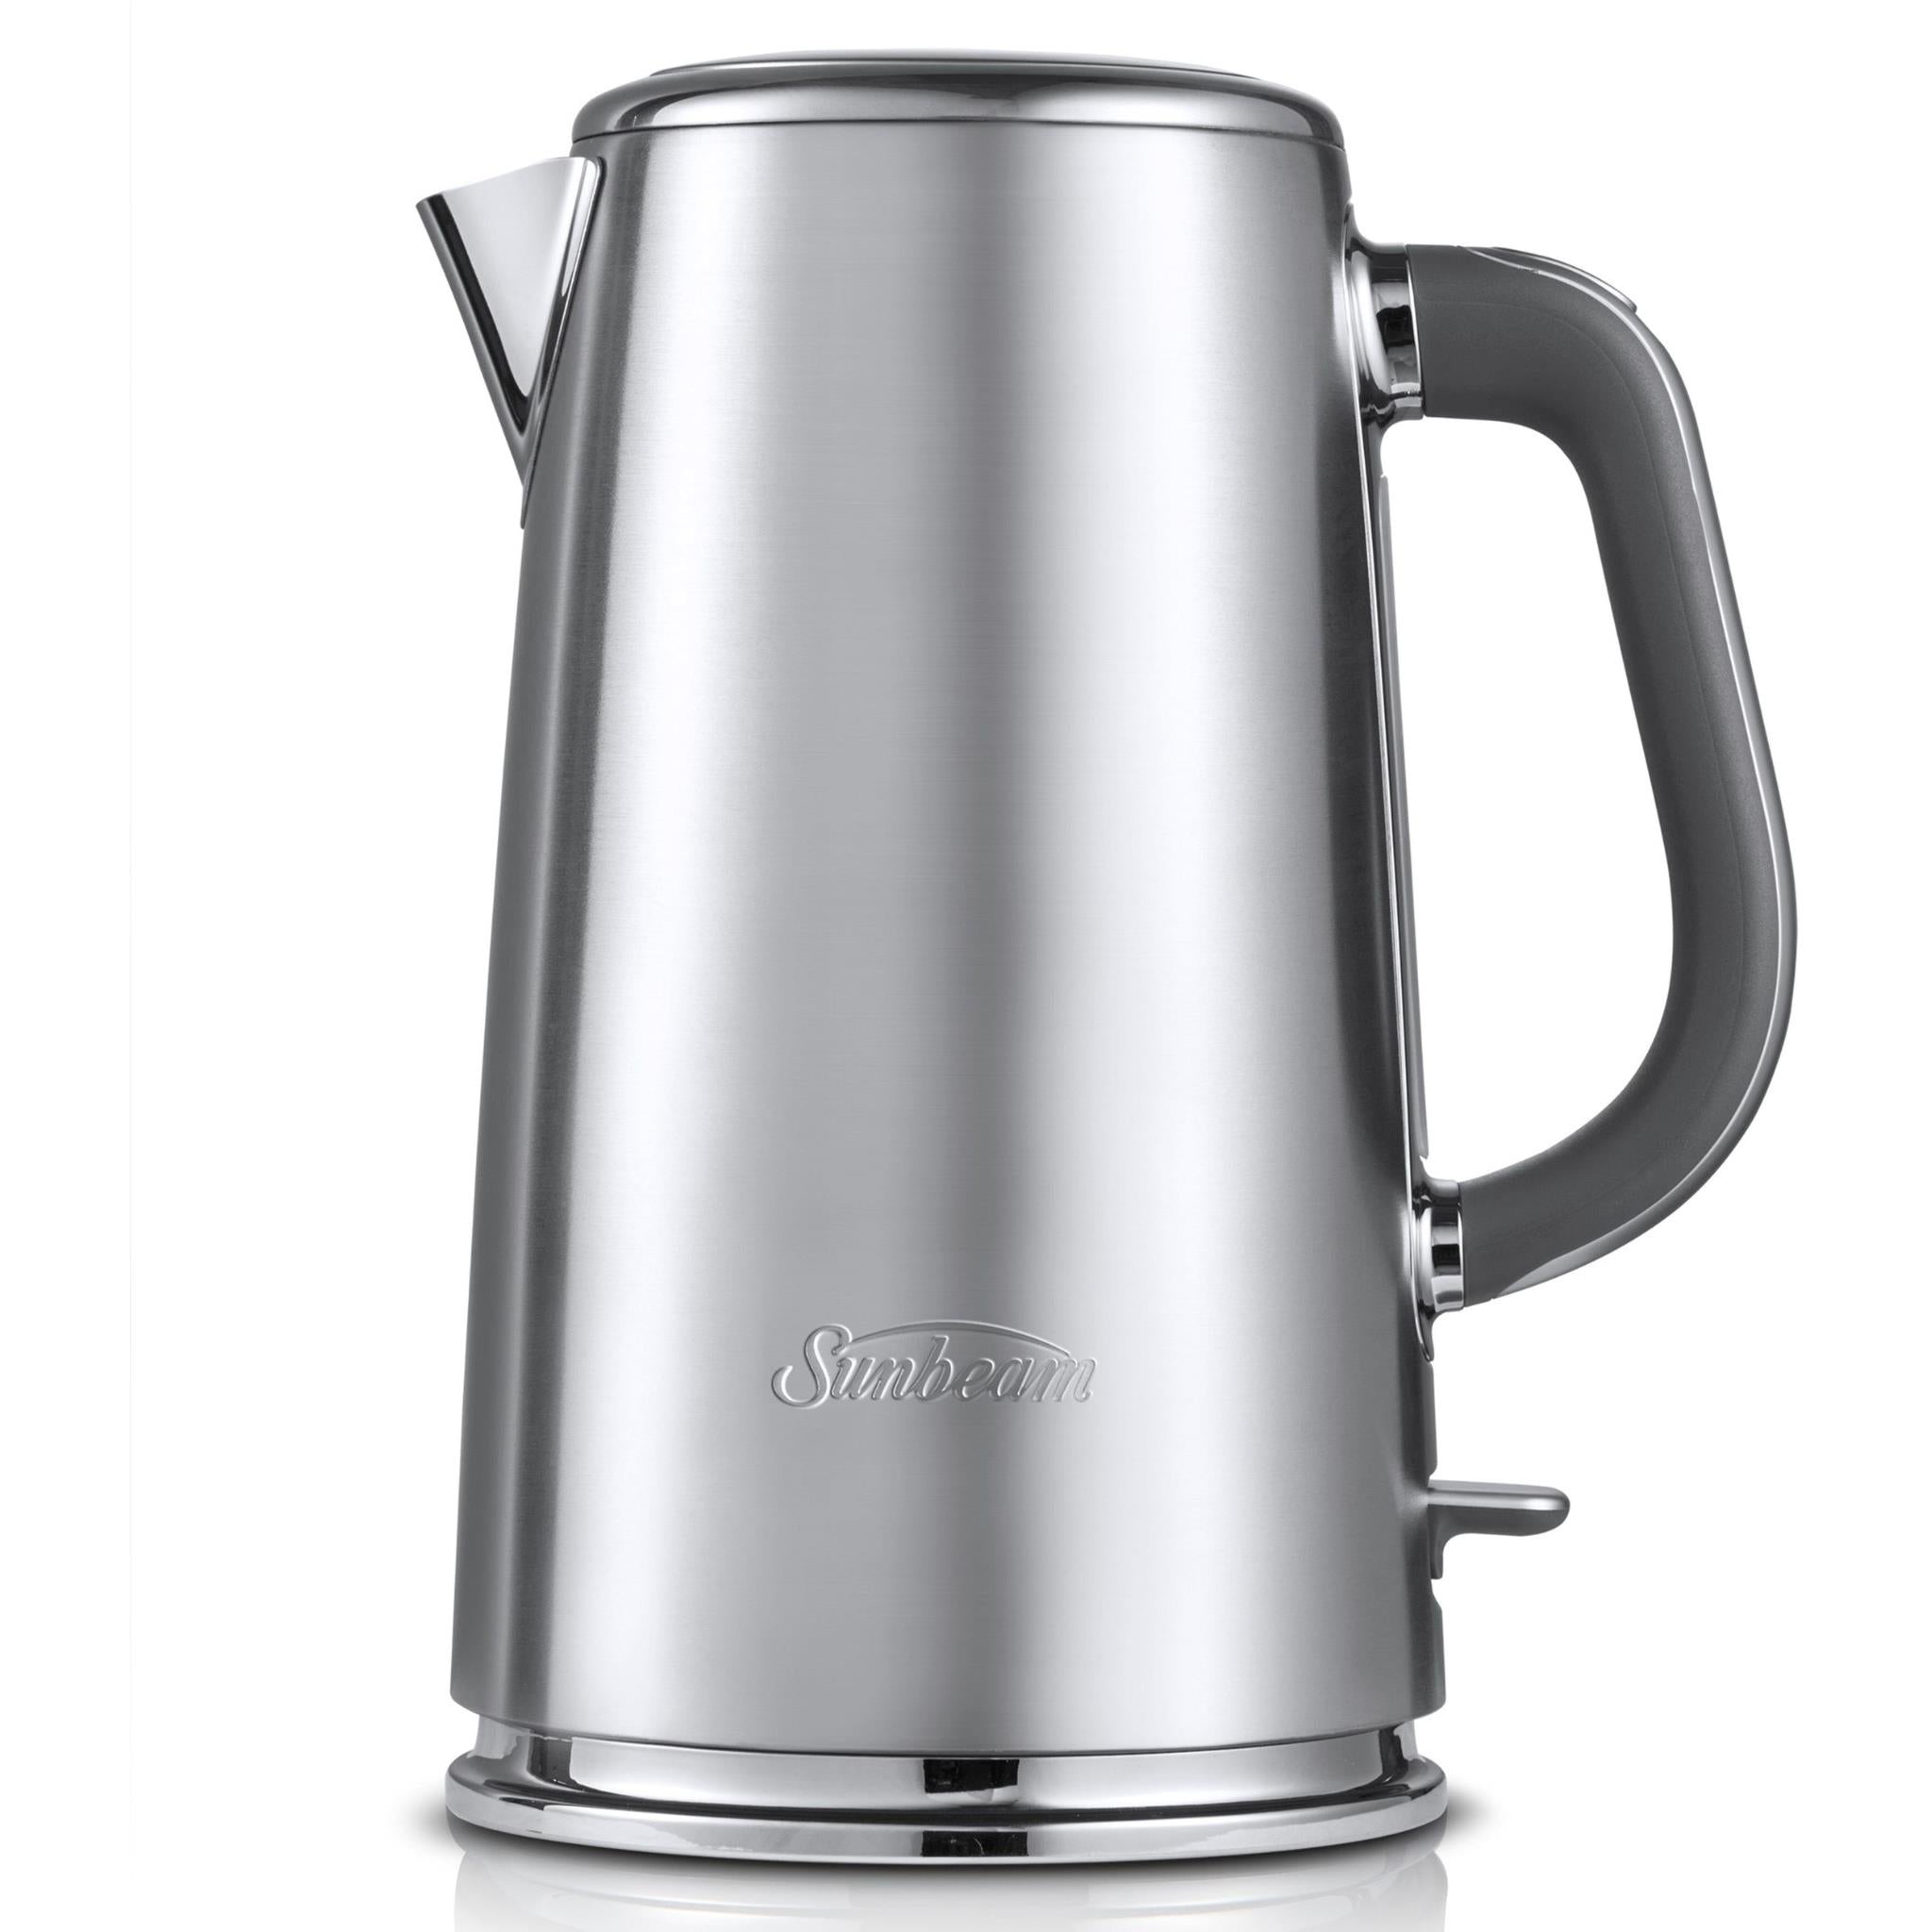 sunbeam arise 1.7l kettle (stainless steel)